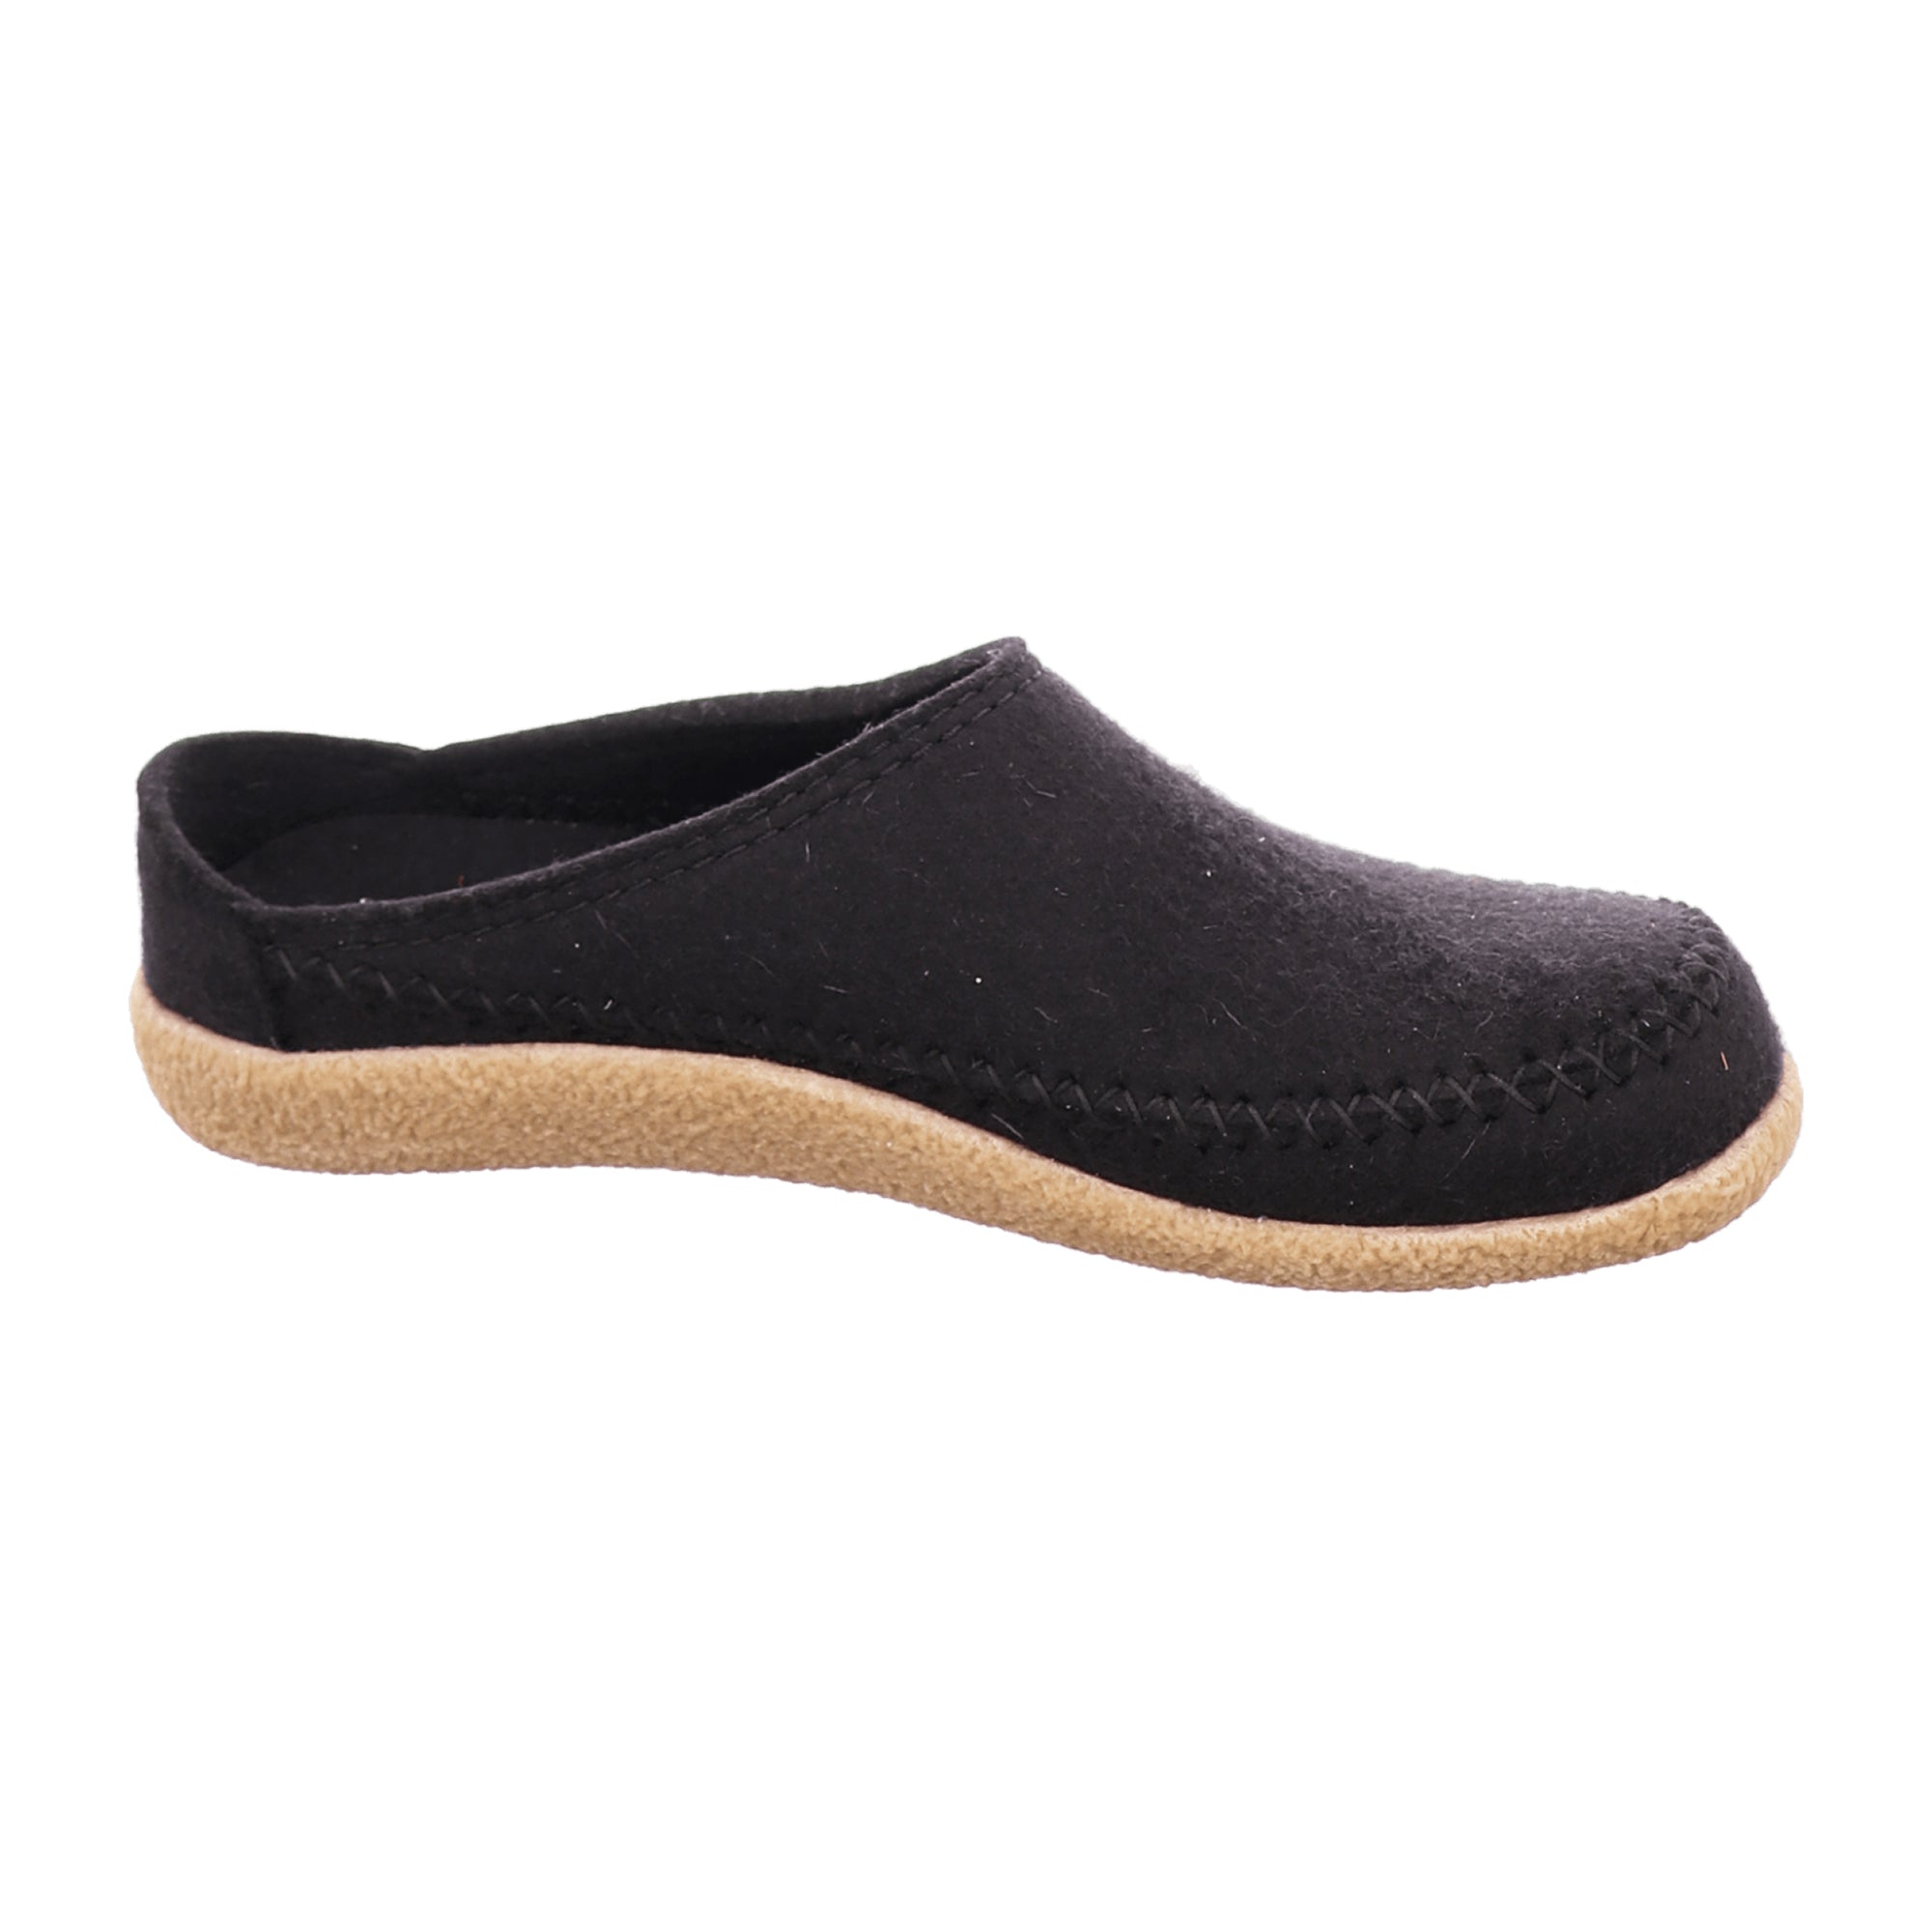 Haflinger Men's Slippers - Durable & Stylish Black Wool Comfort